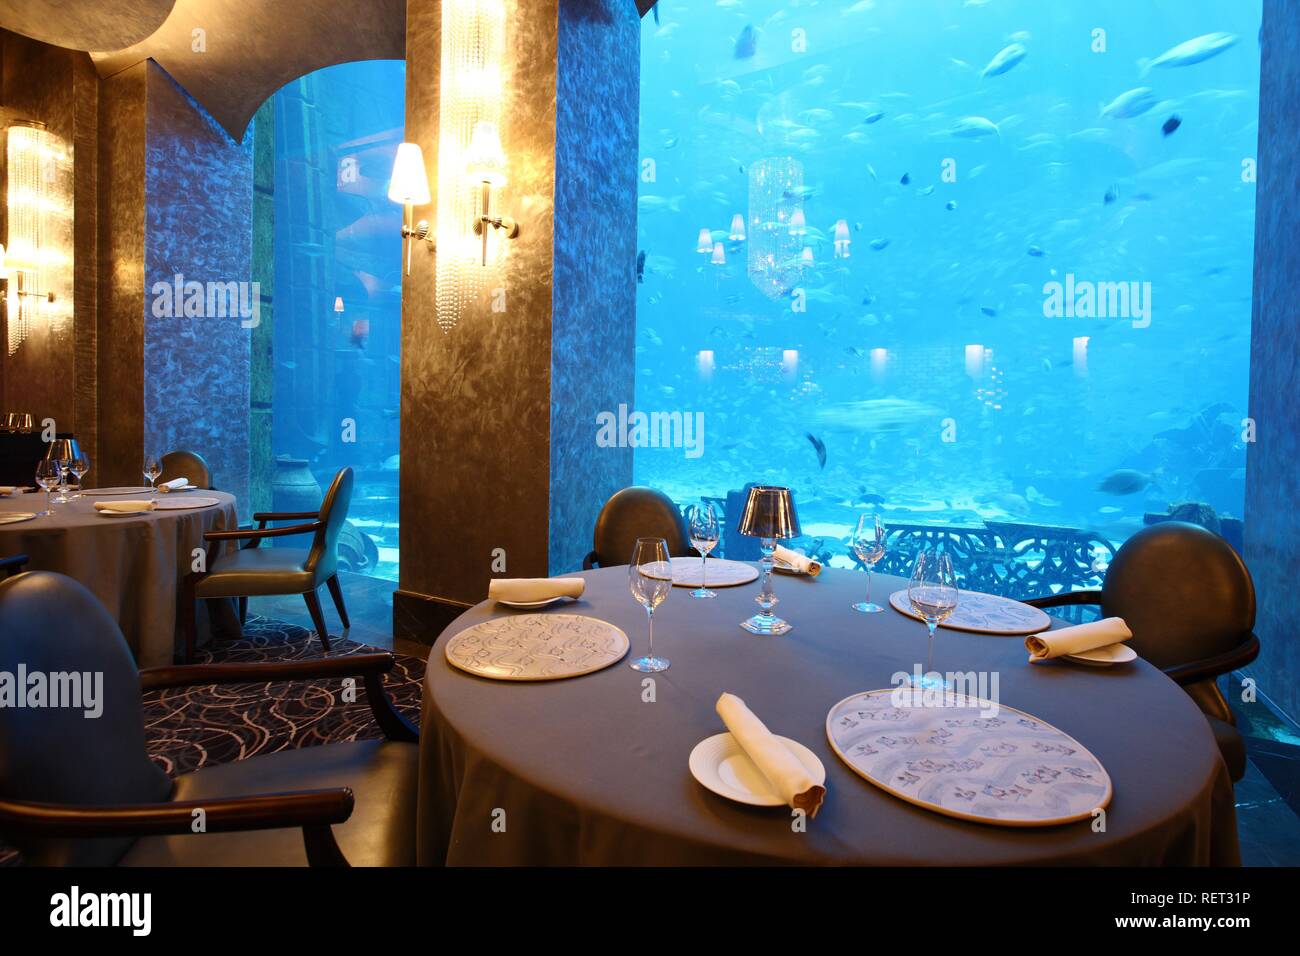 Ossiano Fish Restaurant, looking into the 11 million liter Ambassador Lagoon aquarium, in the Atlantis Hotel, The Palm, Dubai Stock Photo